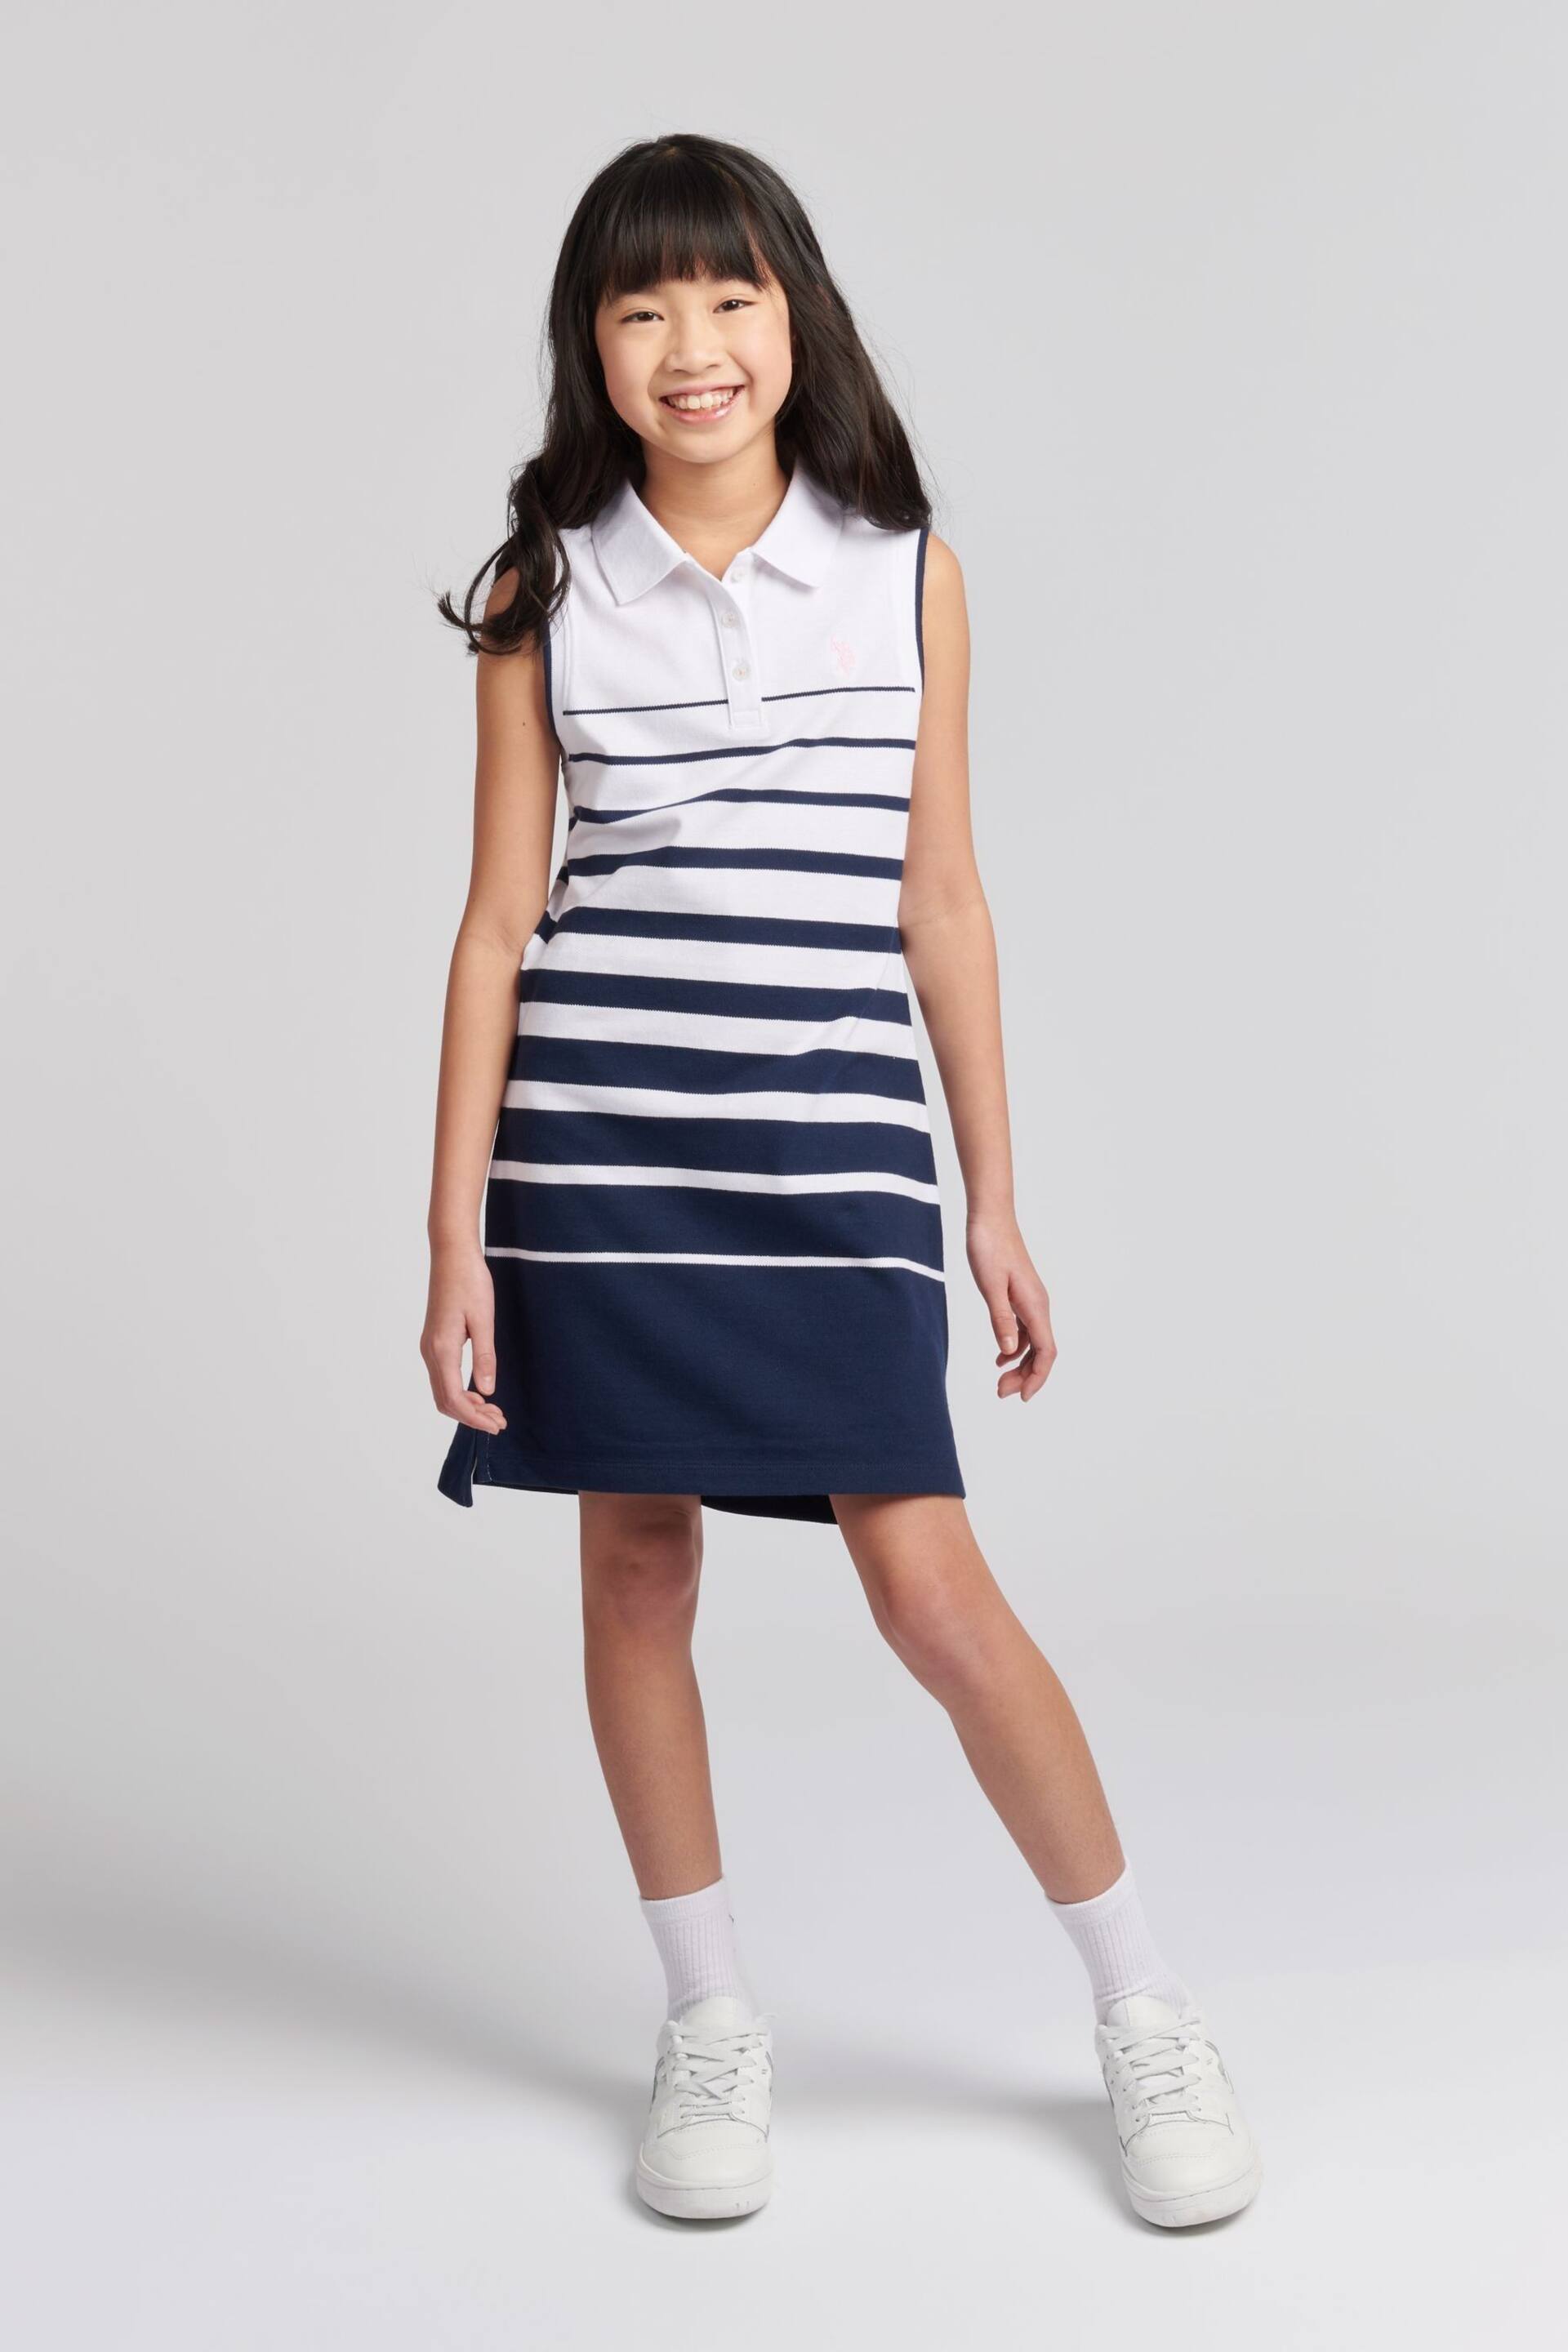 U.S. Polo Assn. Girls Blue Striped Sleeveless Polo Dress - Image 2 of 6